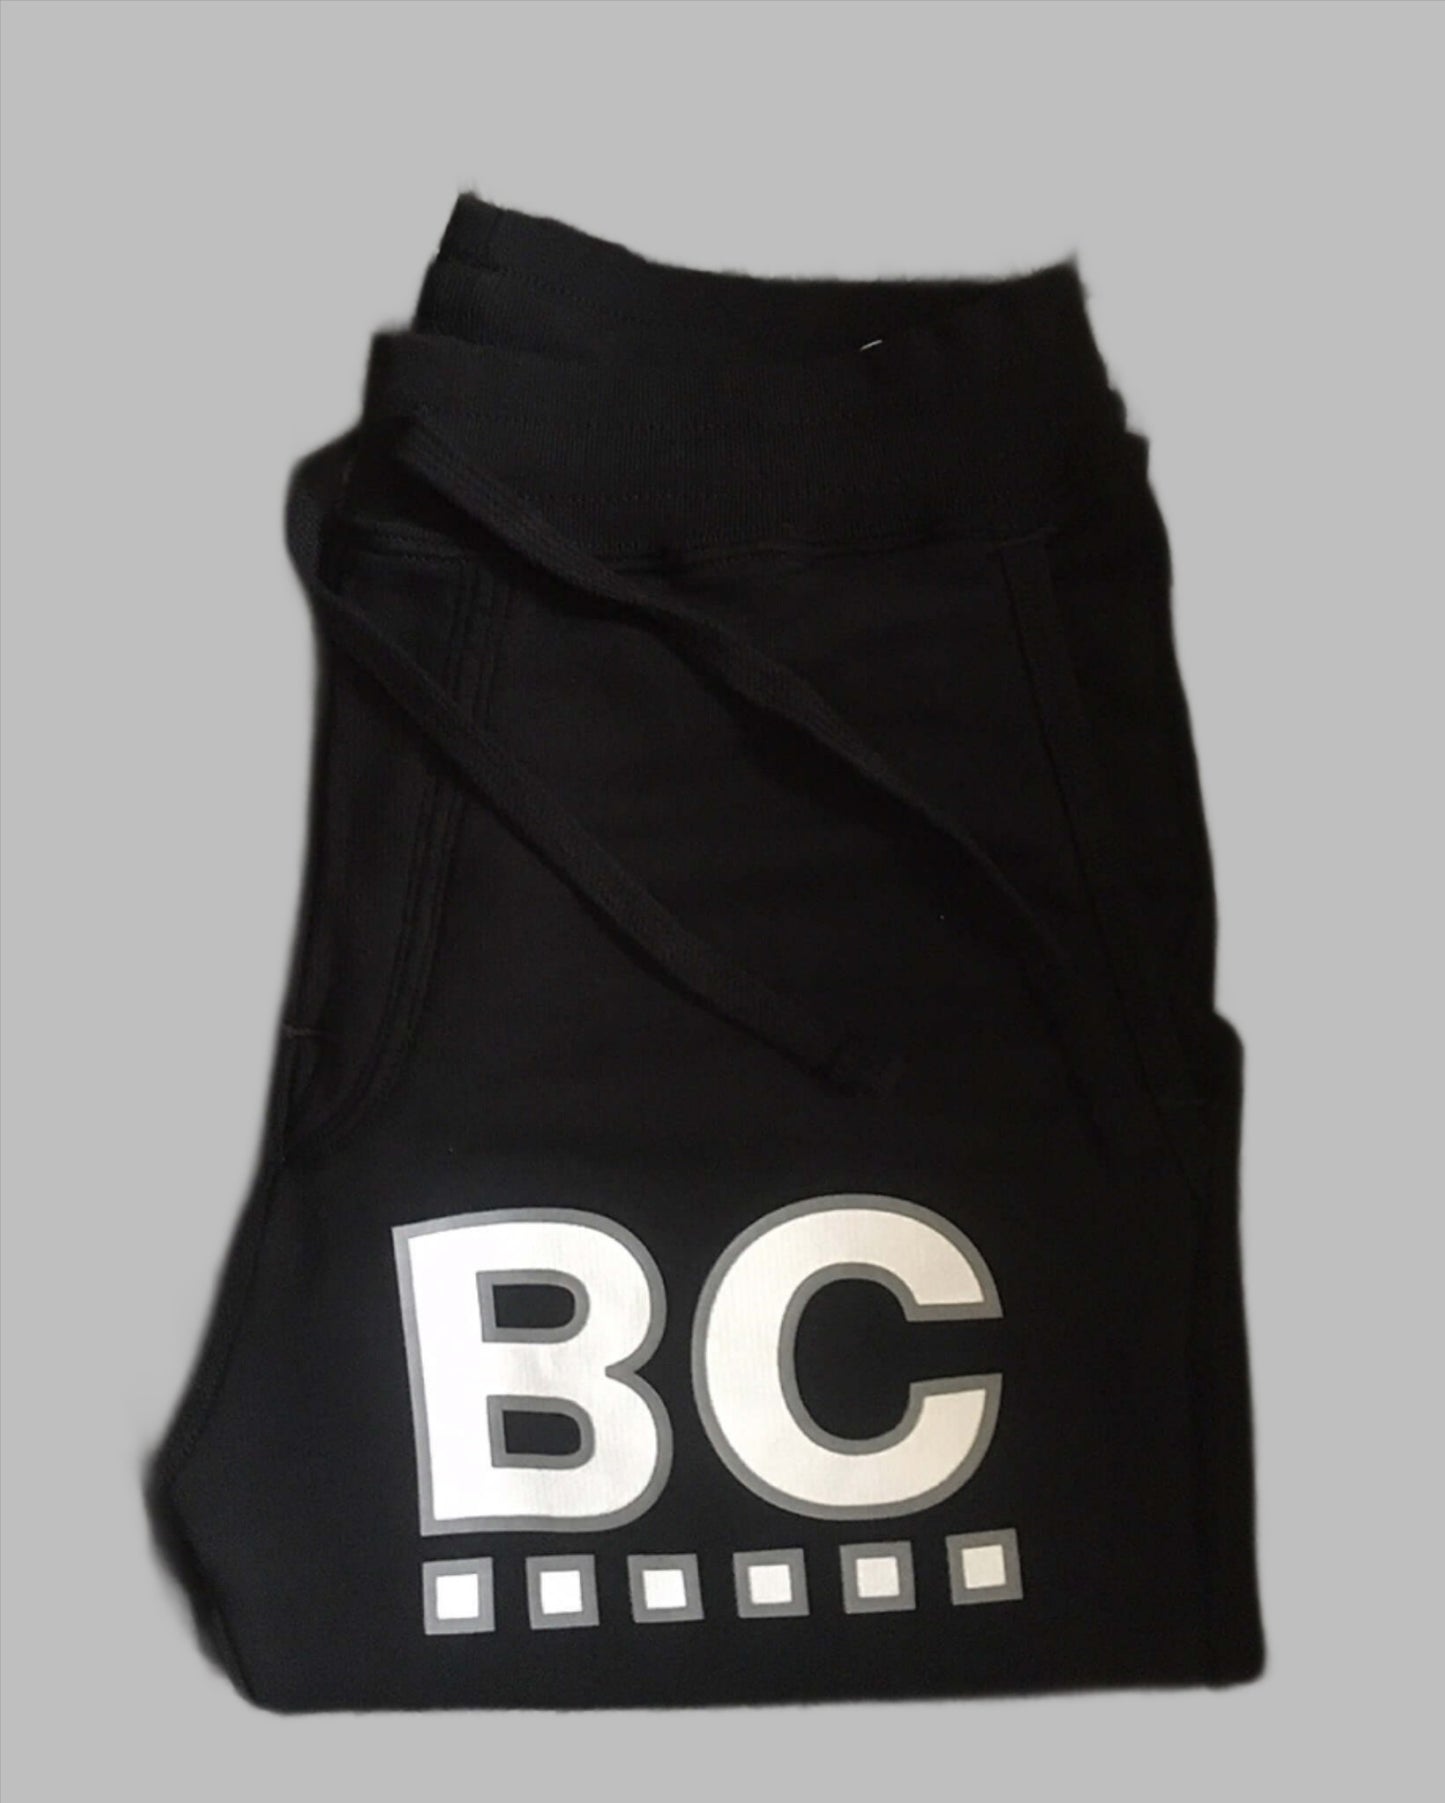 Best Company BC Track Pants Black